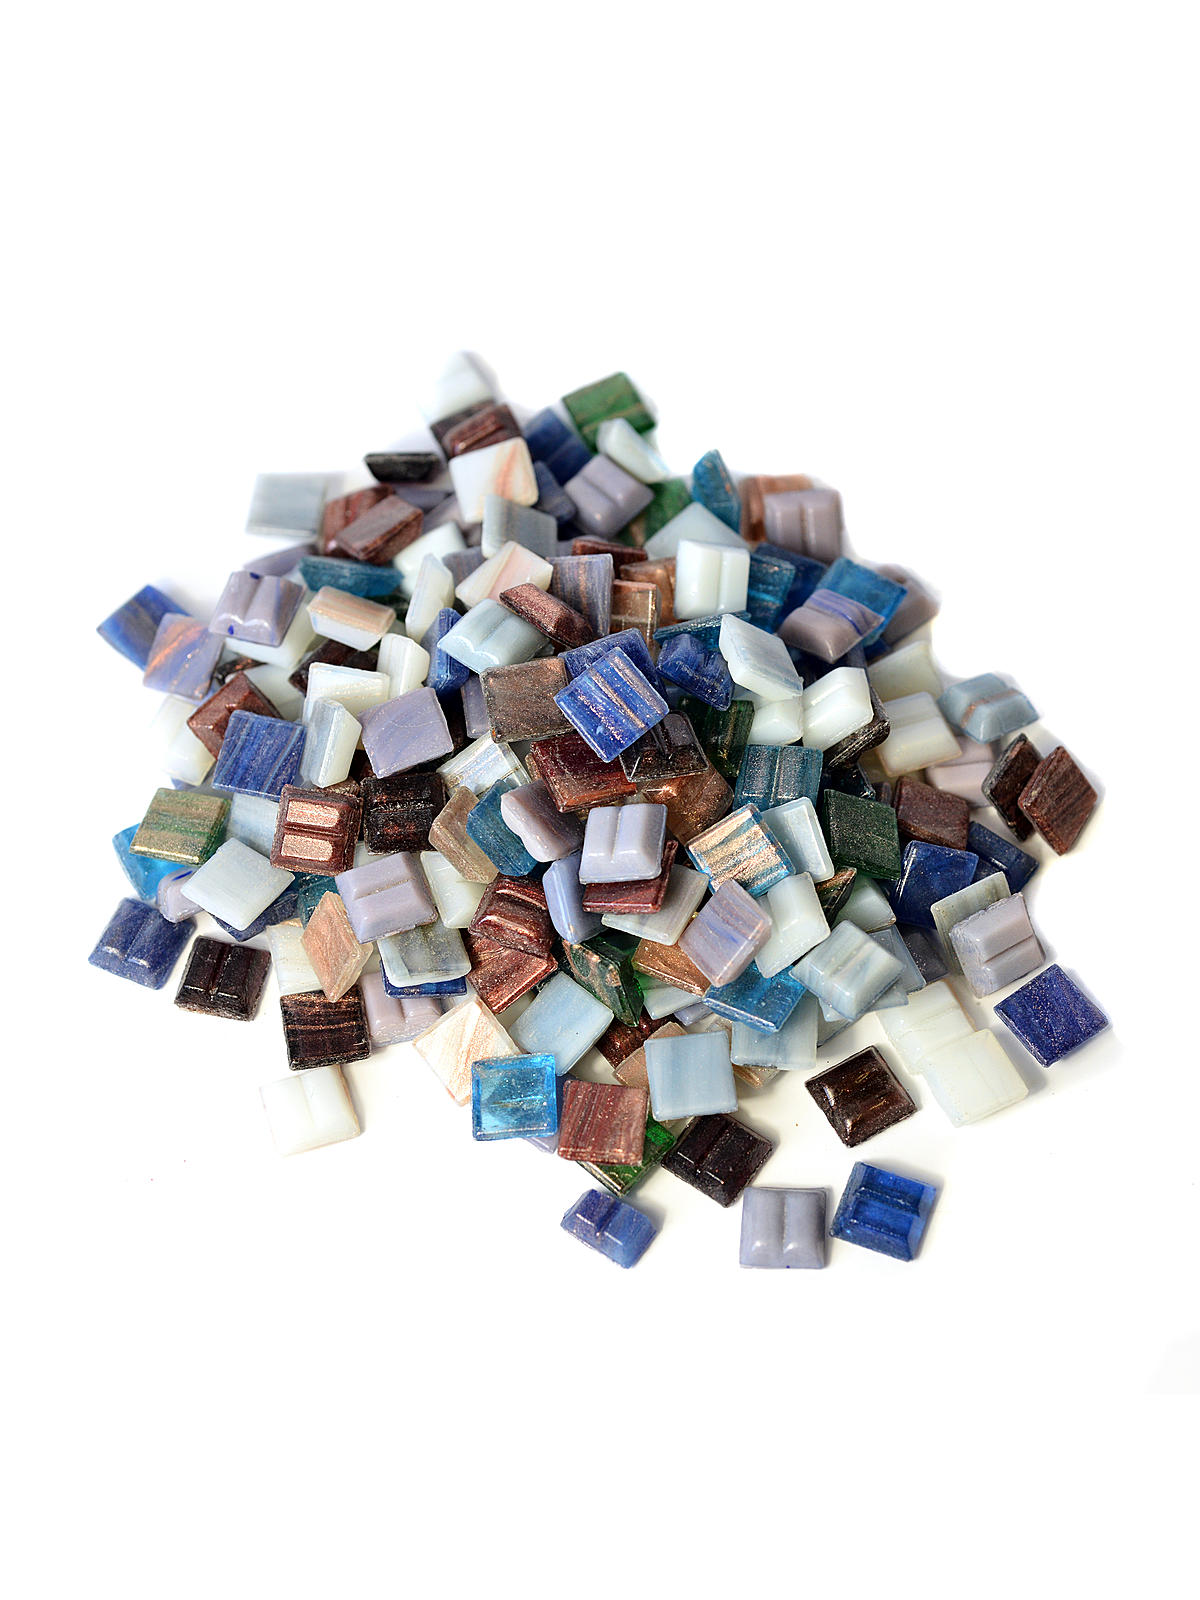 Vitreous Glass Mosaic Tiles -- Metallic Colors Assorted 3 8 In. 1 2 Lb. Bag